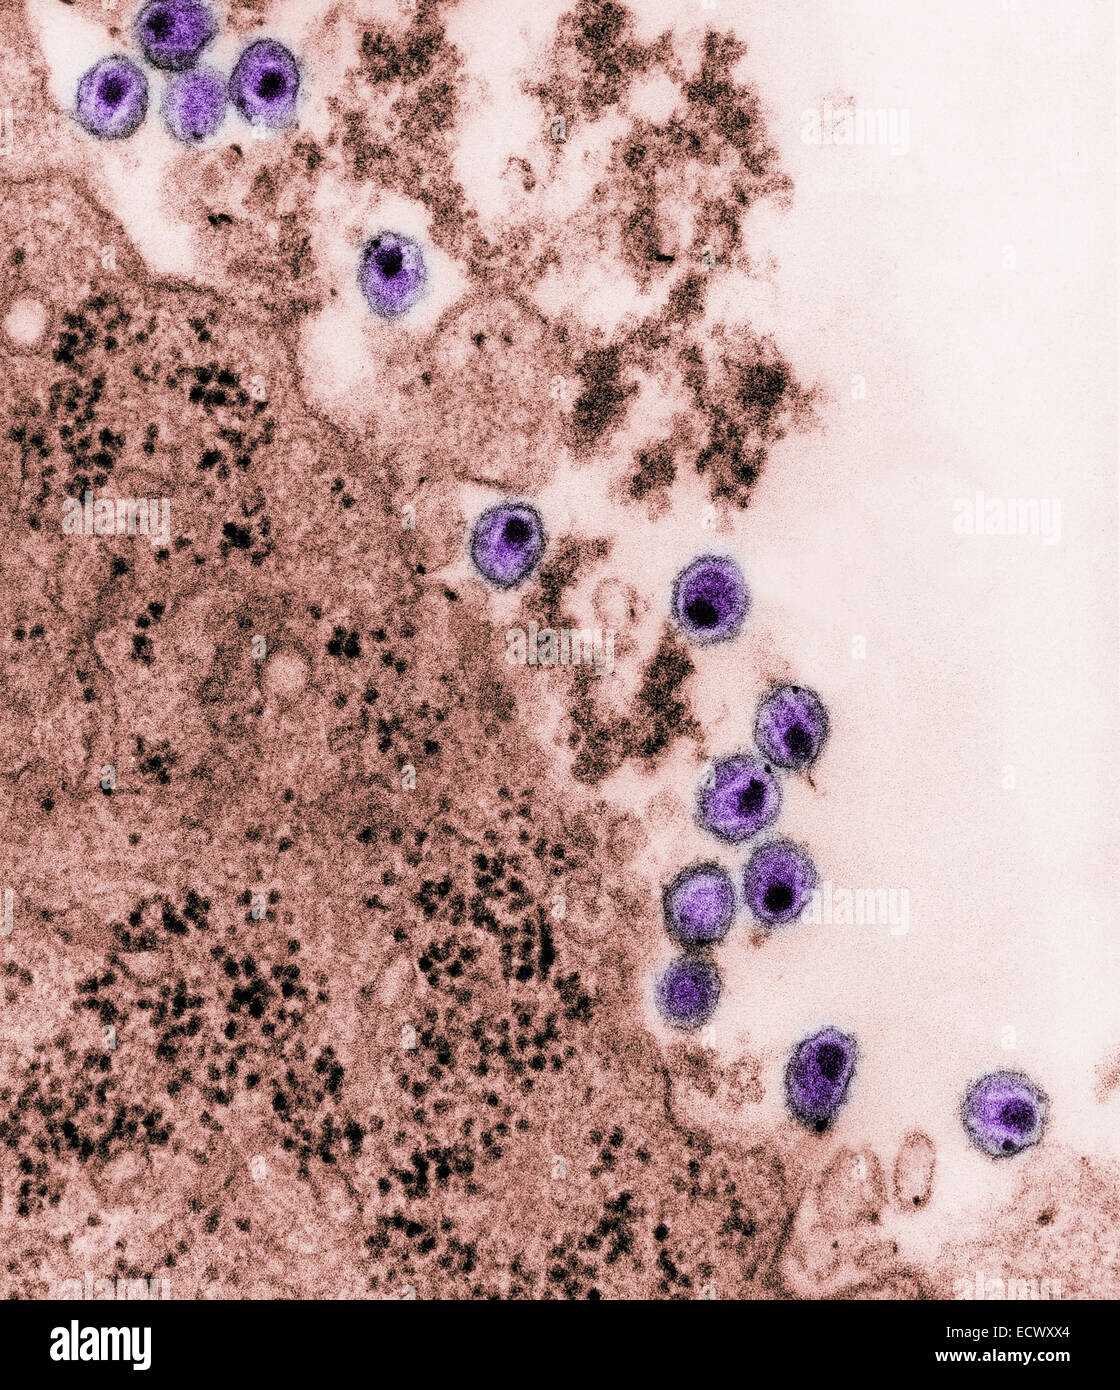 Micrografia elettronica di virus di immunodeficienza umana HIV. Foto Stock